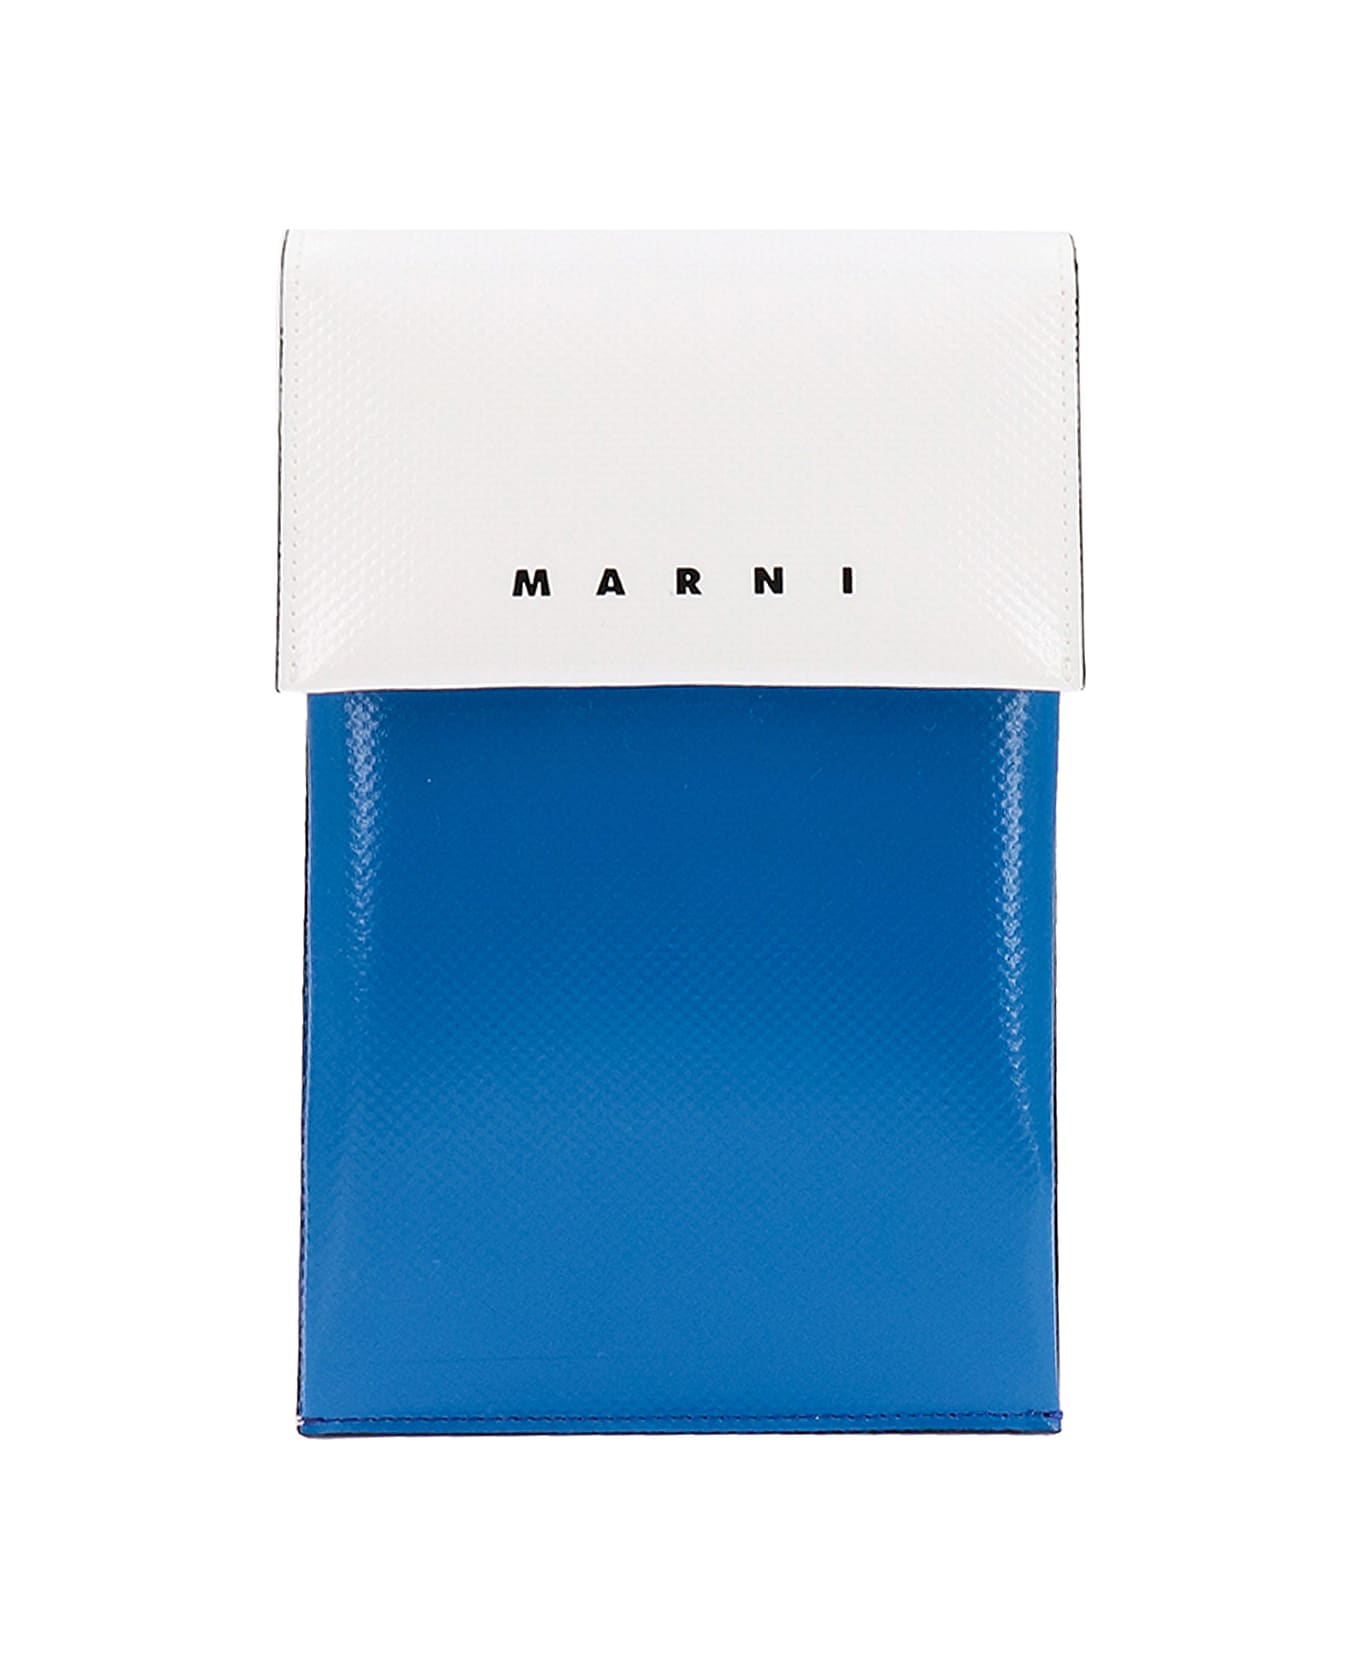 Marni Phone Case - BLUE/WHITE